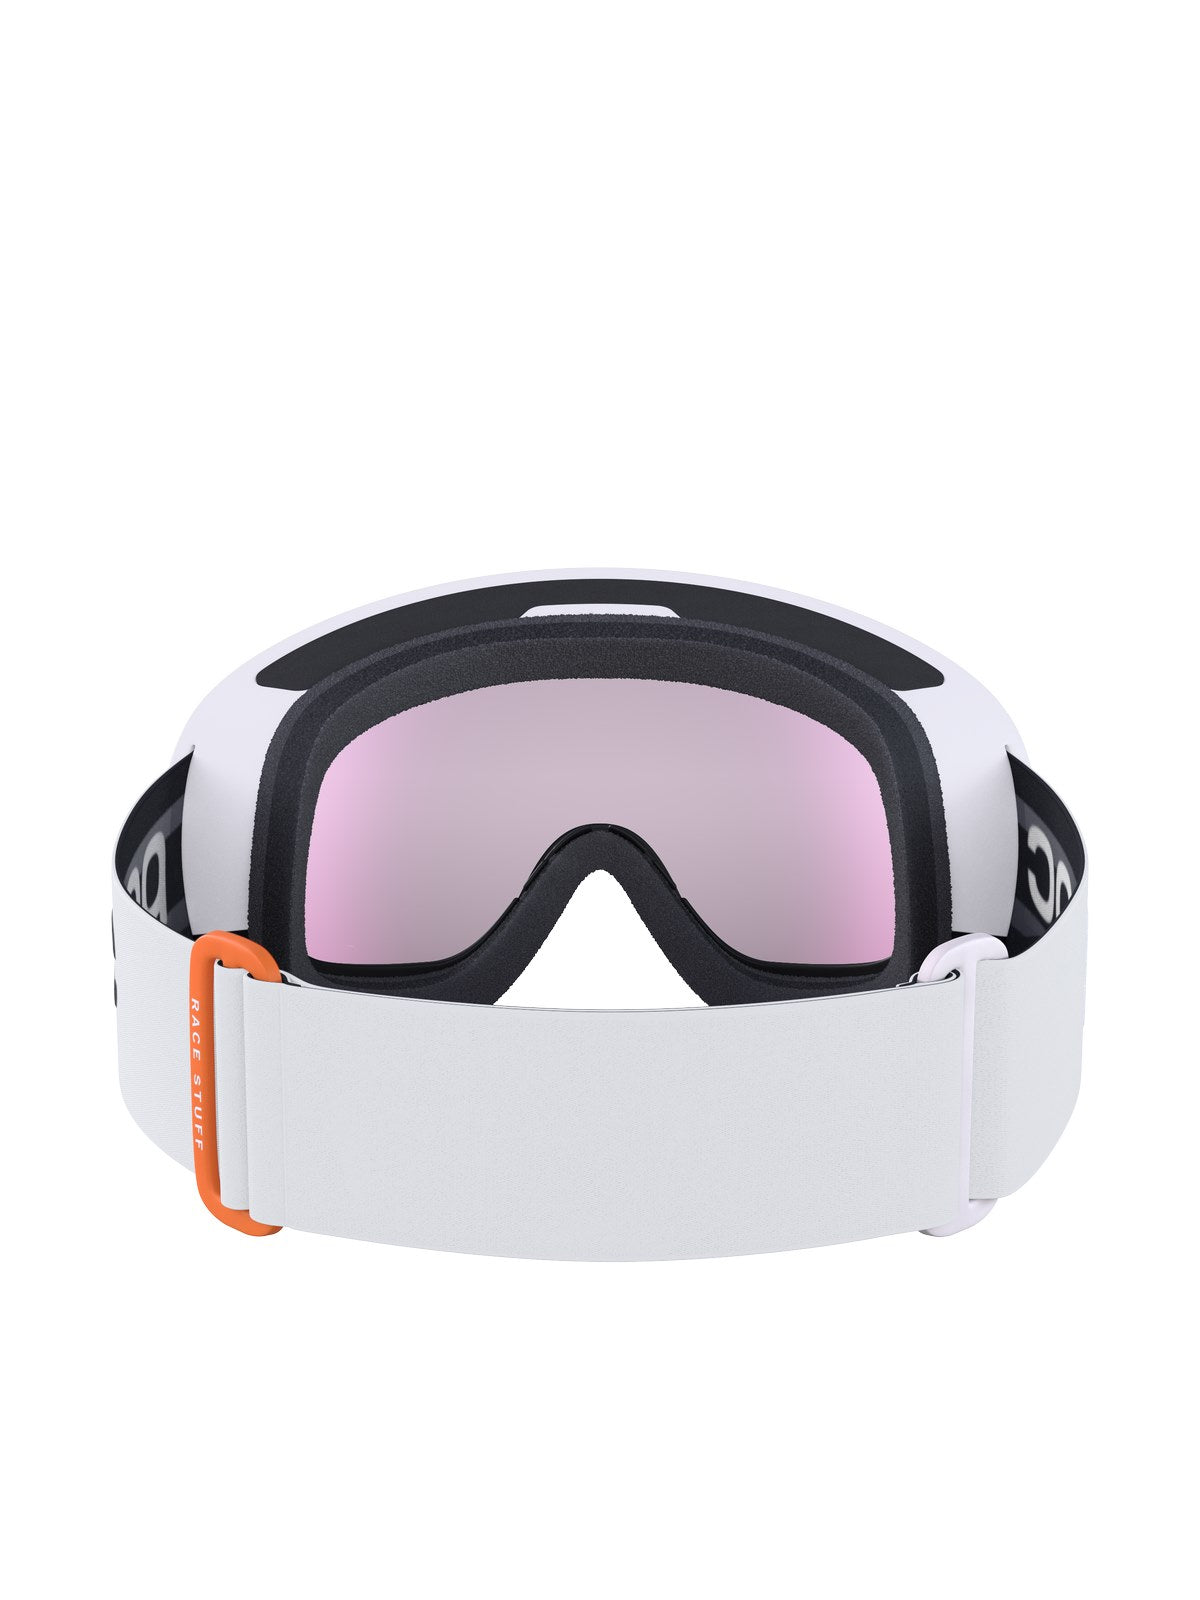 Gogle narciarskie POC Fovea Mid Clarity Comp - Hyd. White/Uran. Black/Clarity Comp Low Light Cat 1